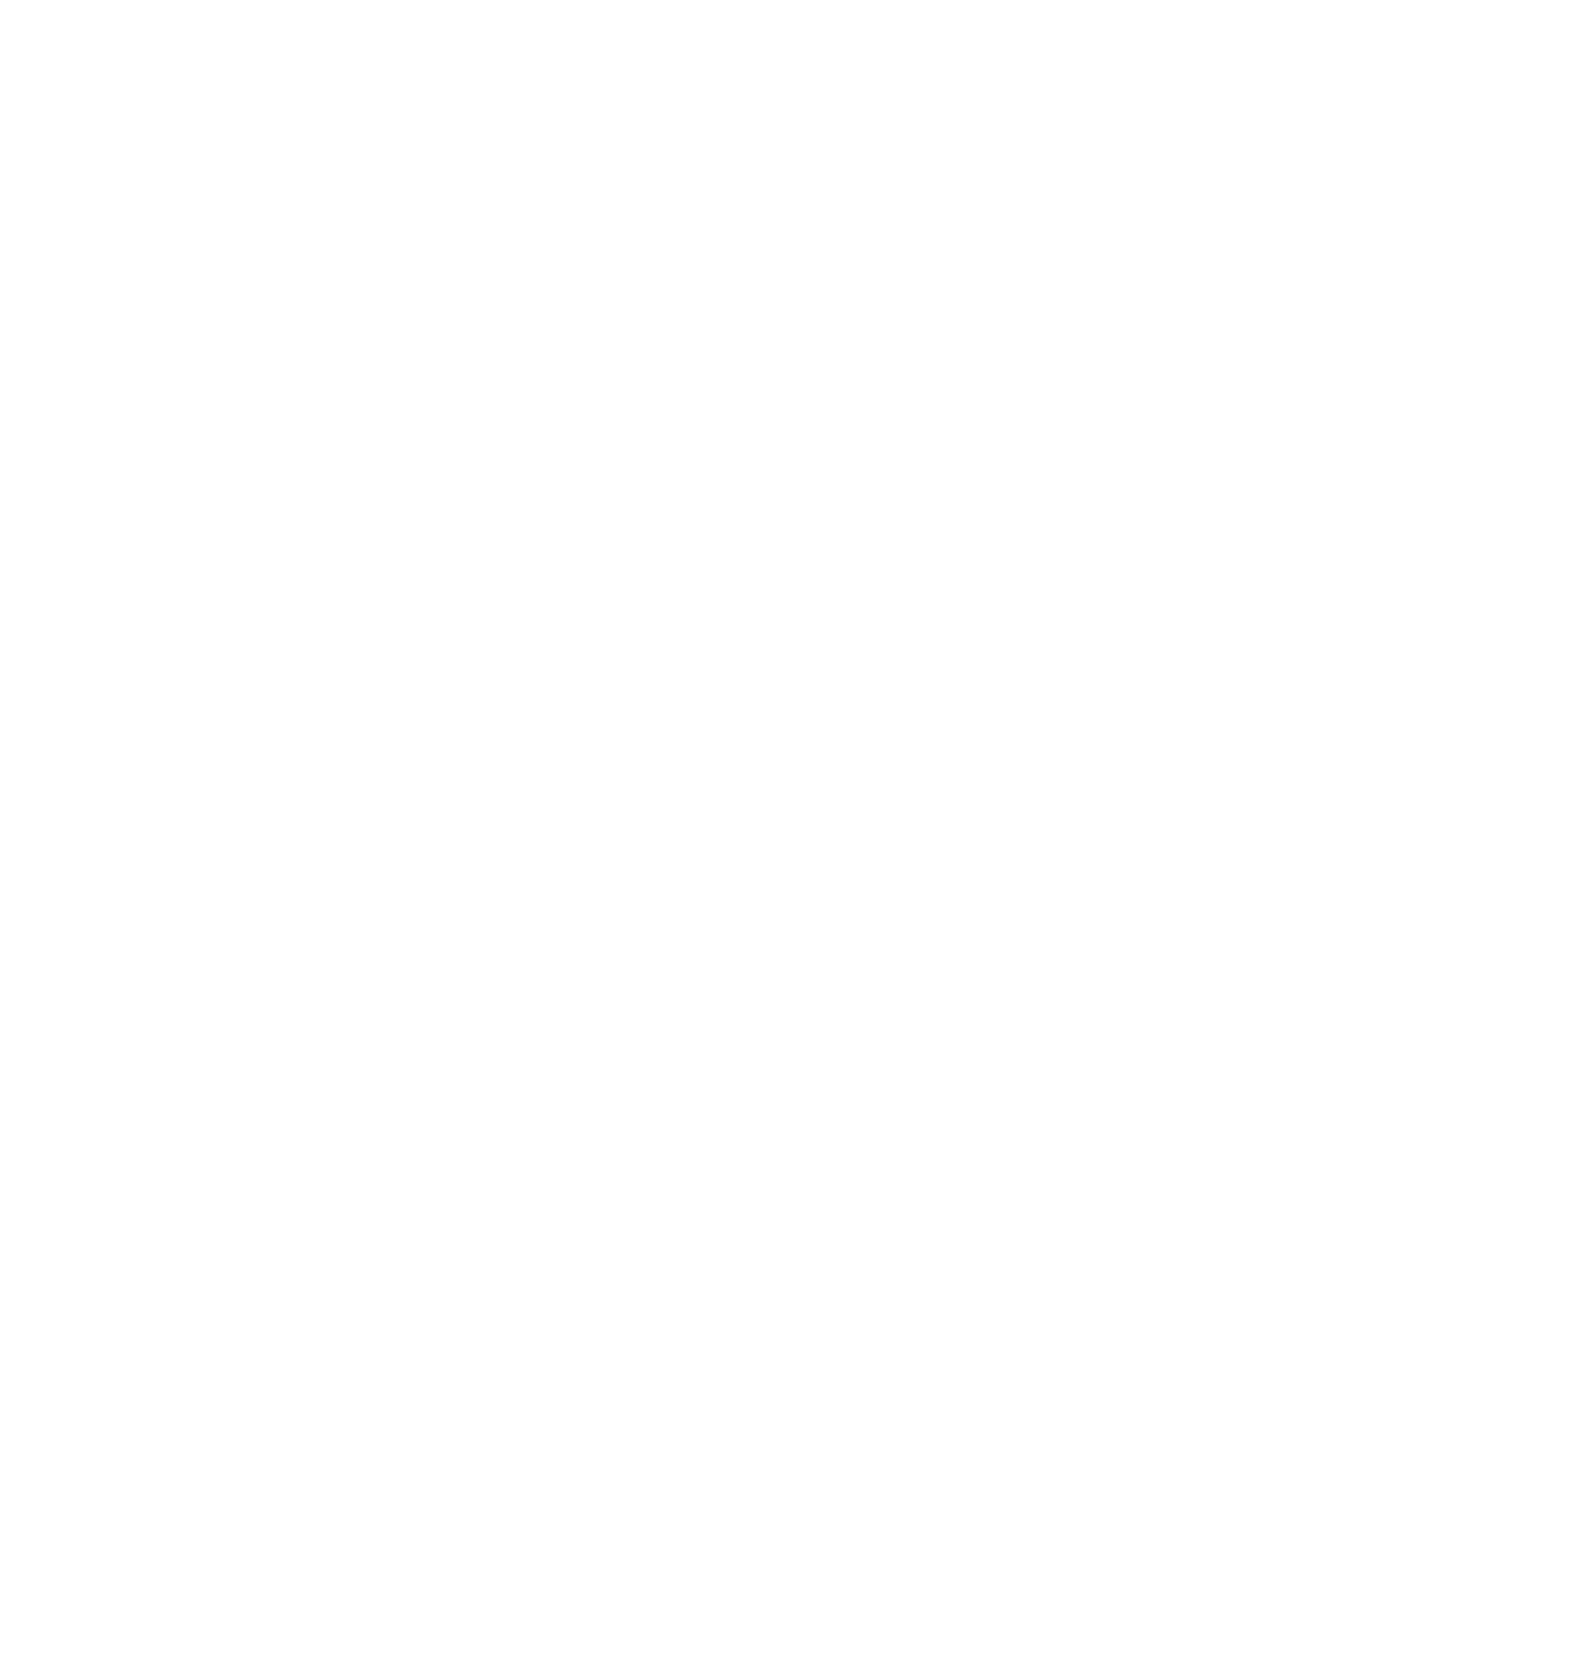 China Construction Bank logo for dark backgrounds (transparent PNG)